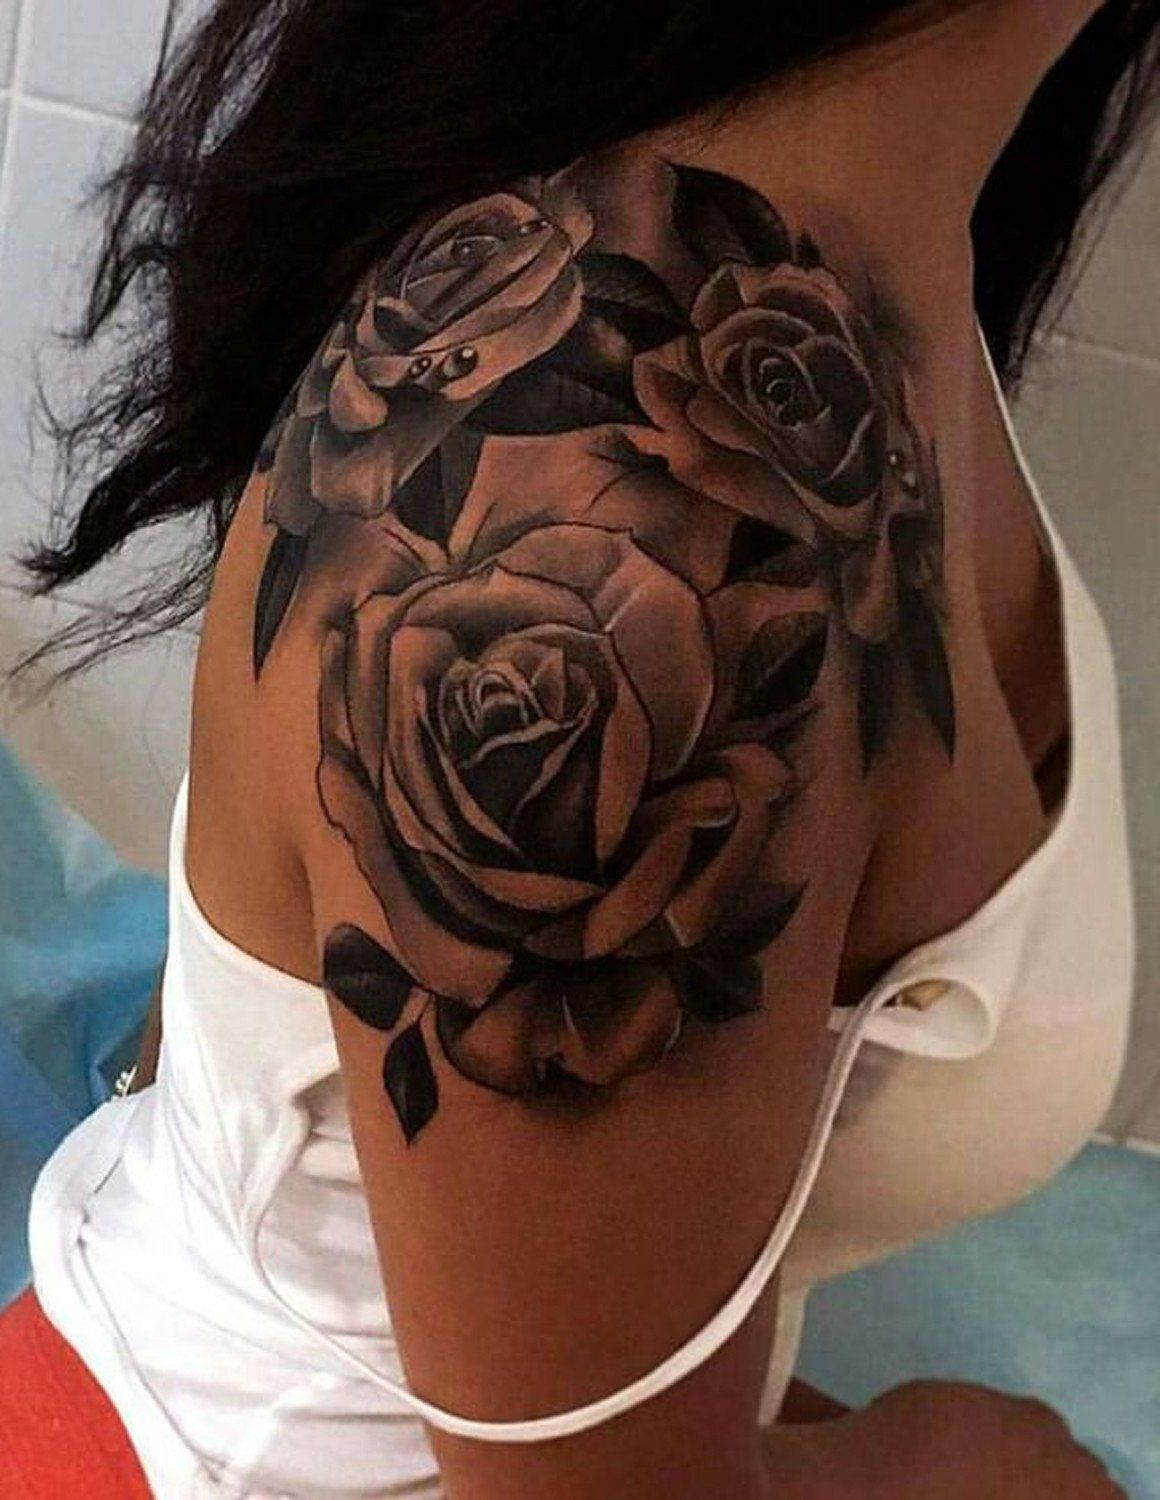 Black Rose Epaule Shoulder Tattoo Ideas Mybodiart Tats pertaining to dimensions 1160 X 1500